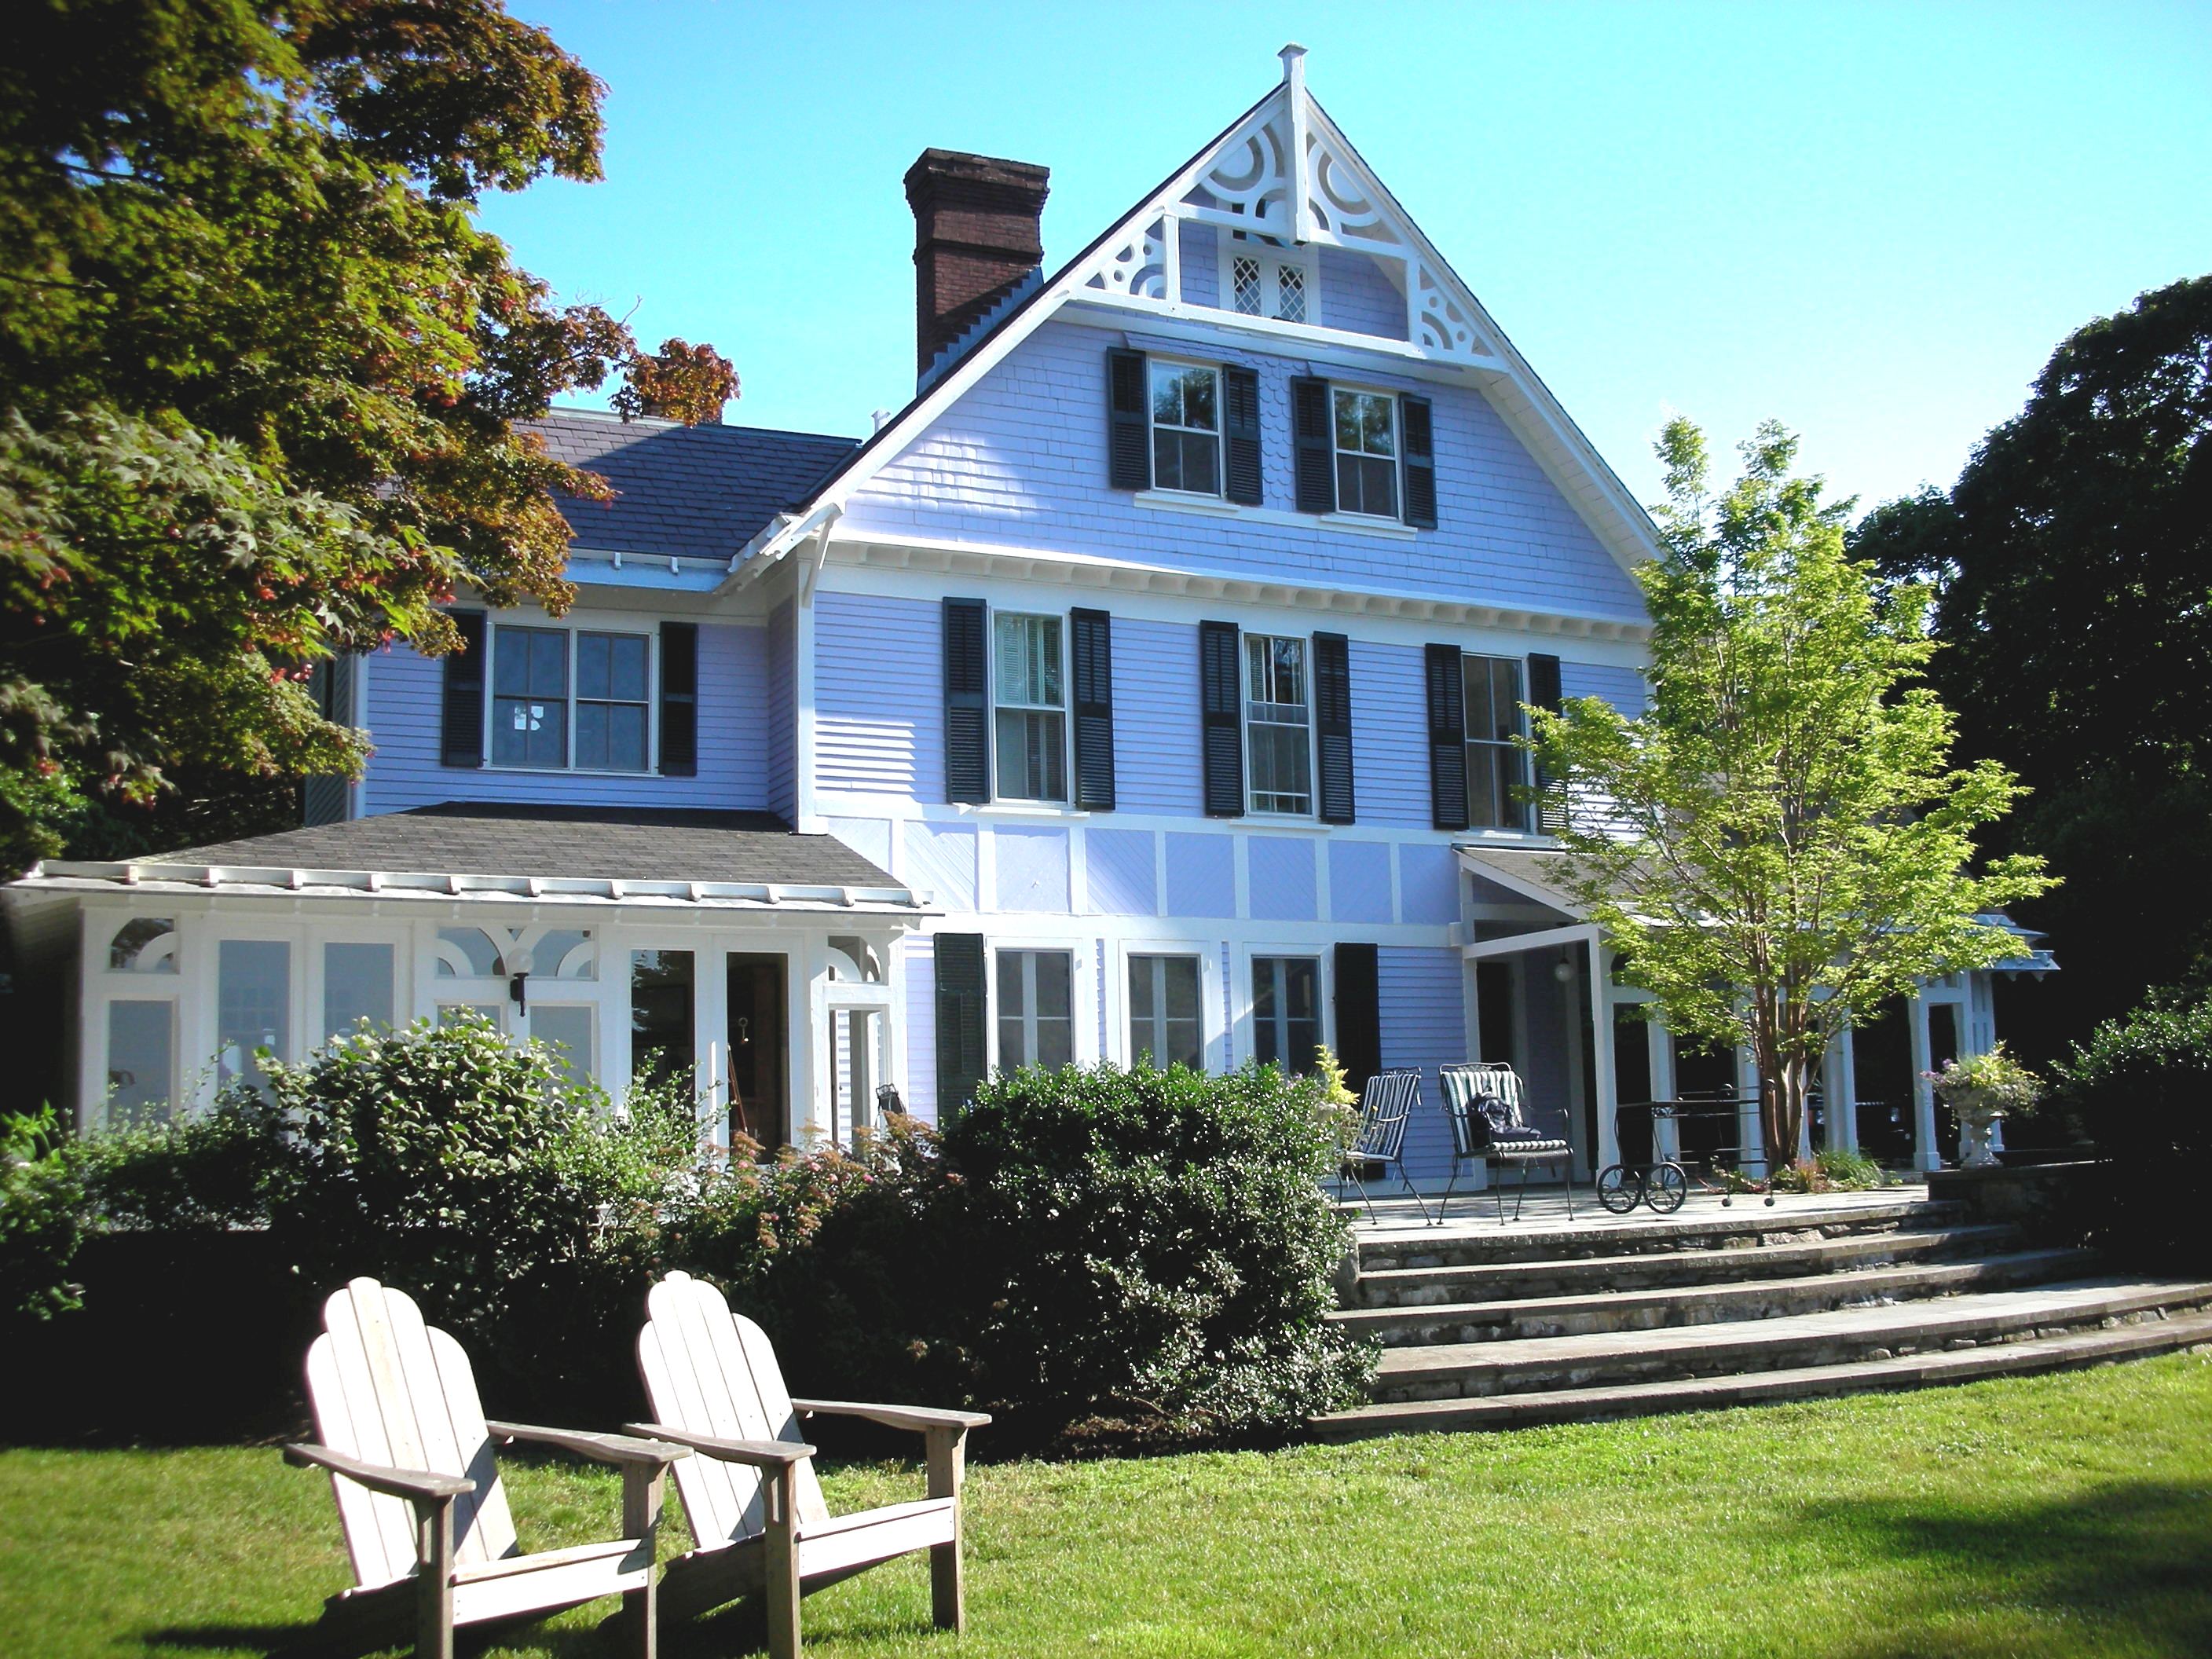 Newport’s “Bluebird Cottage” Sells for $5.4 Million